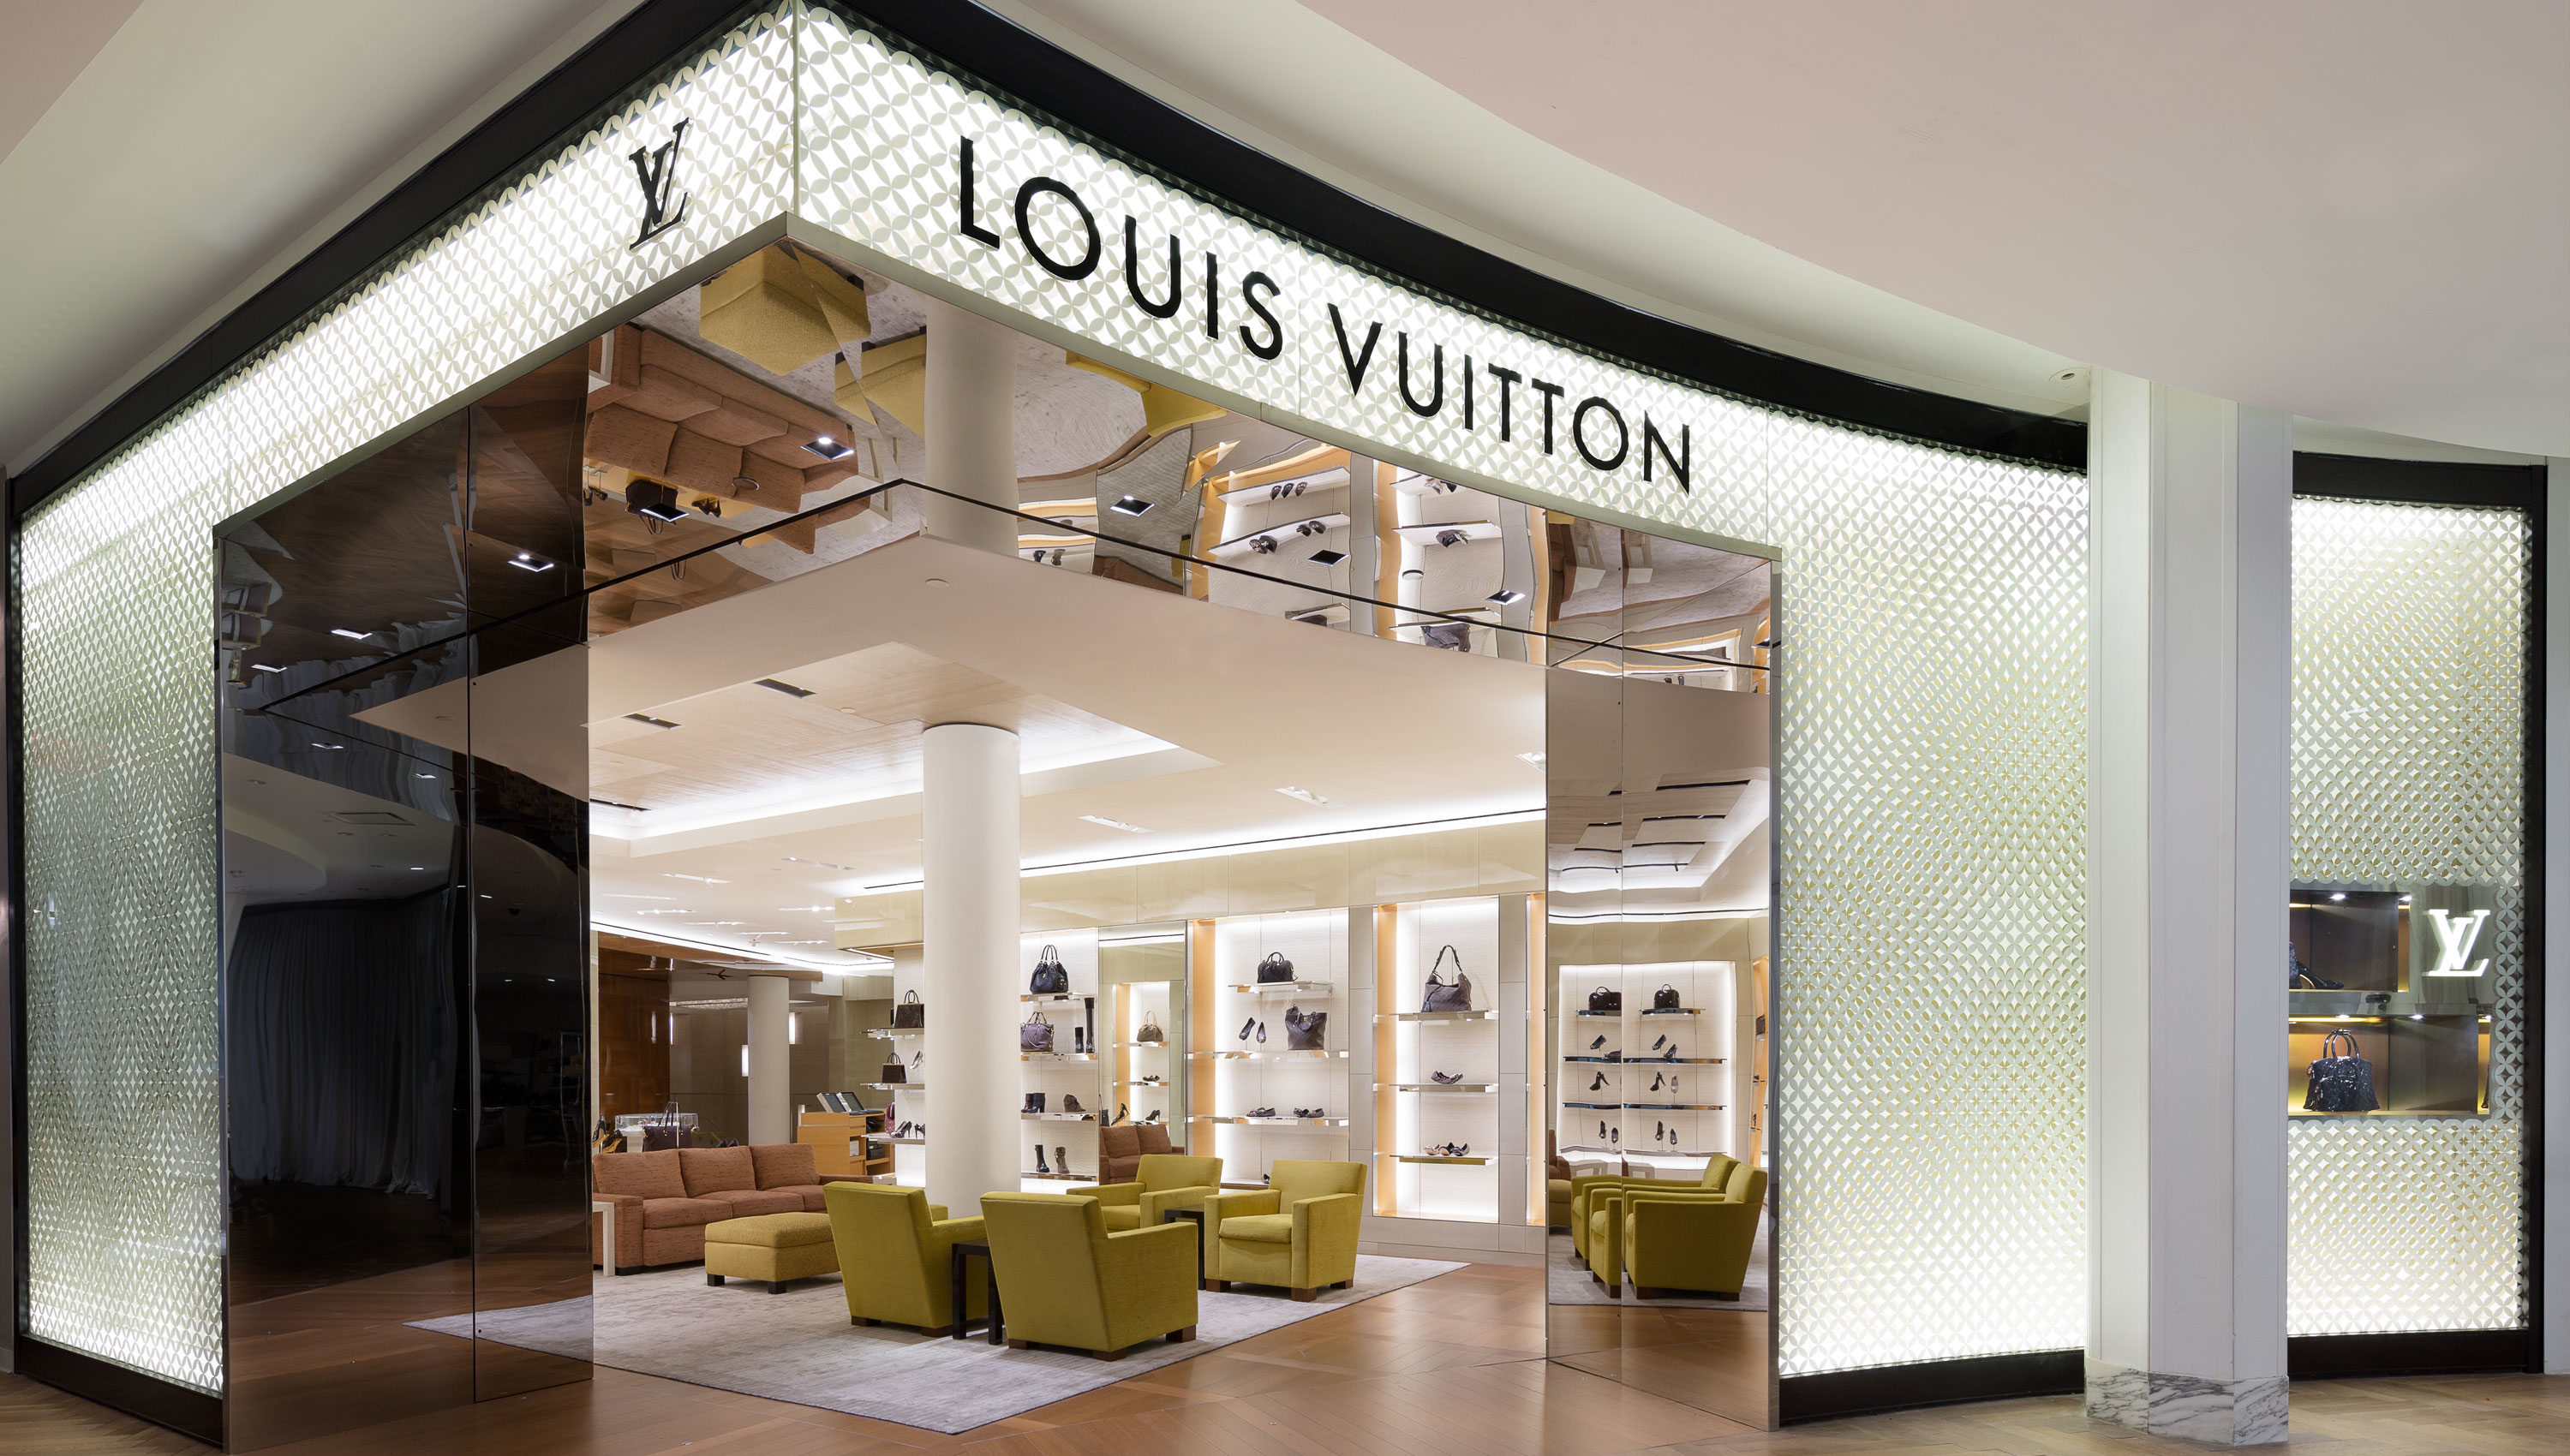 Louis Vuitton Shops Near Me | SEMA Data Co-op